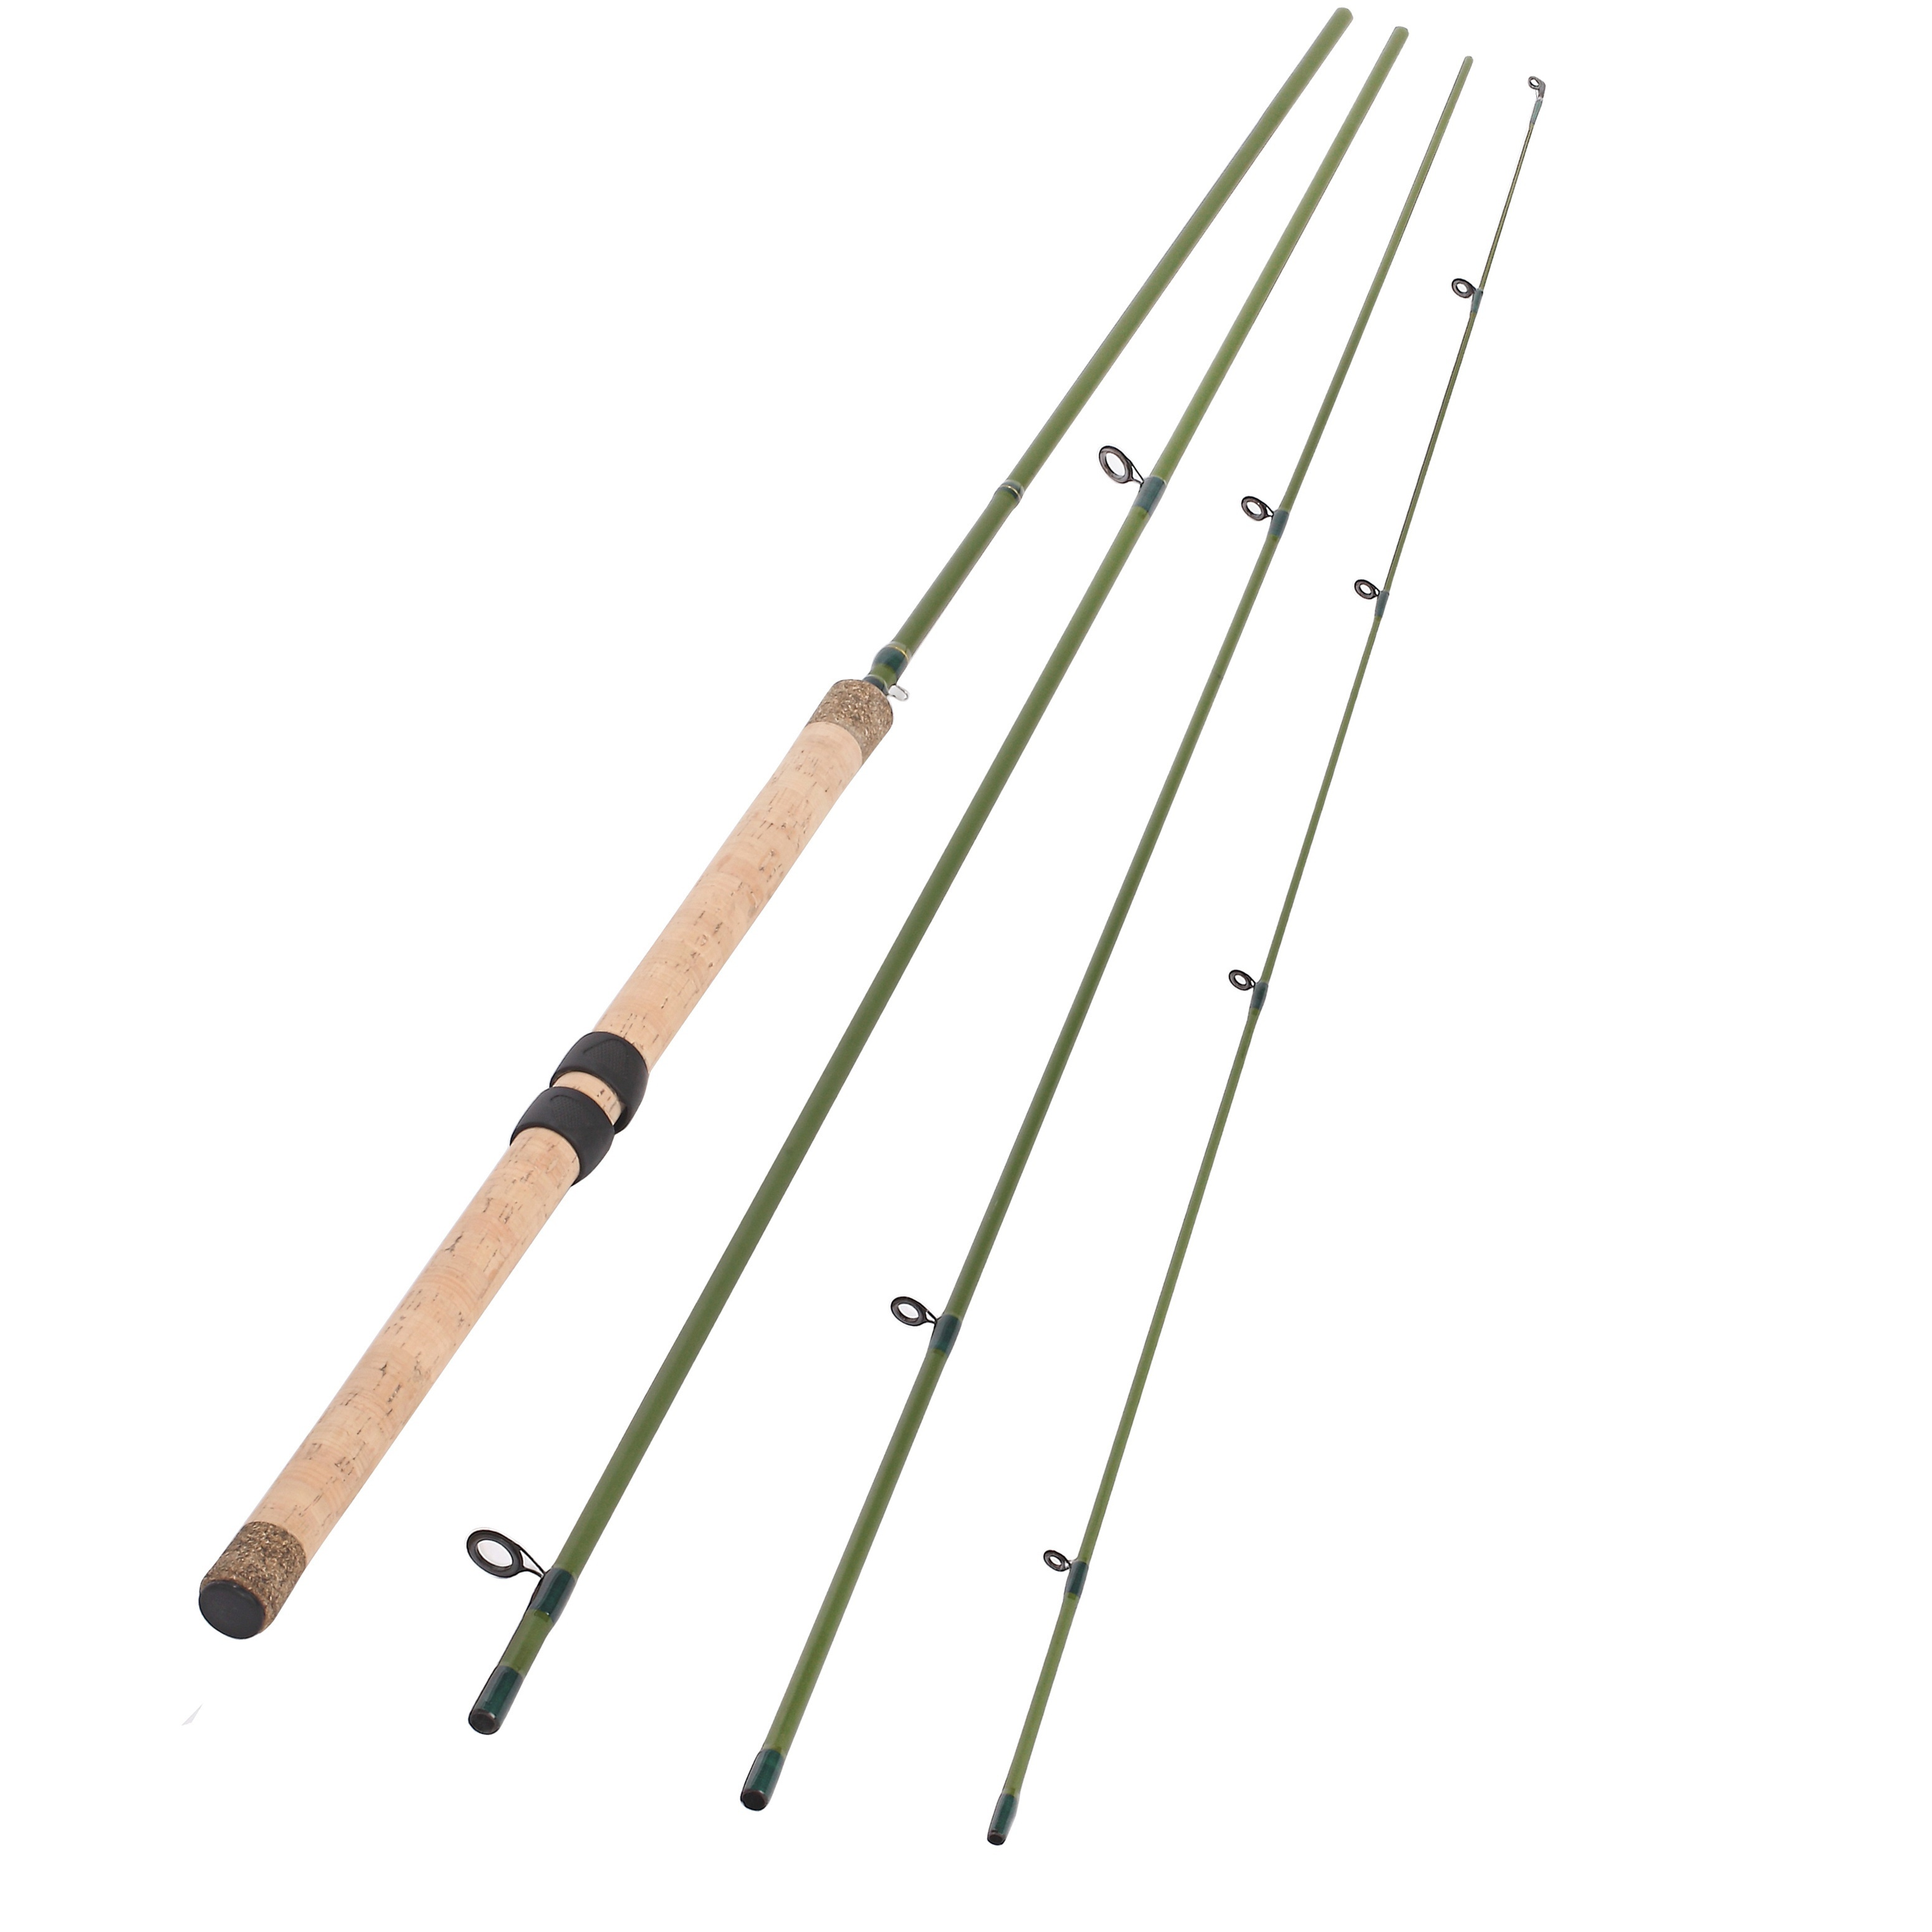 Fiberglass Steelhead Fishing Rods & Poles for sale